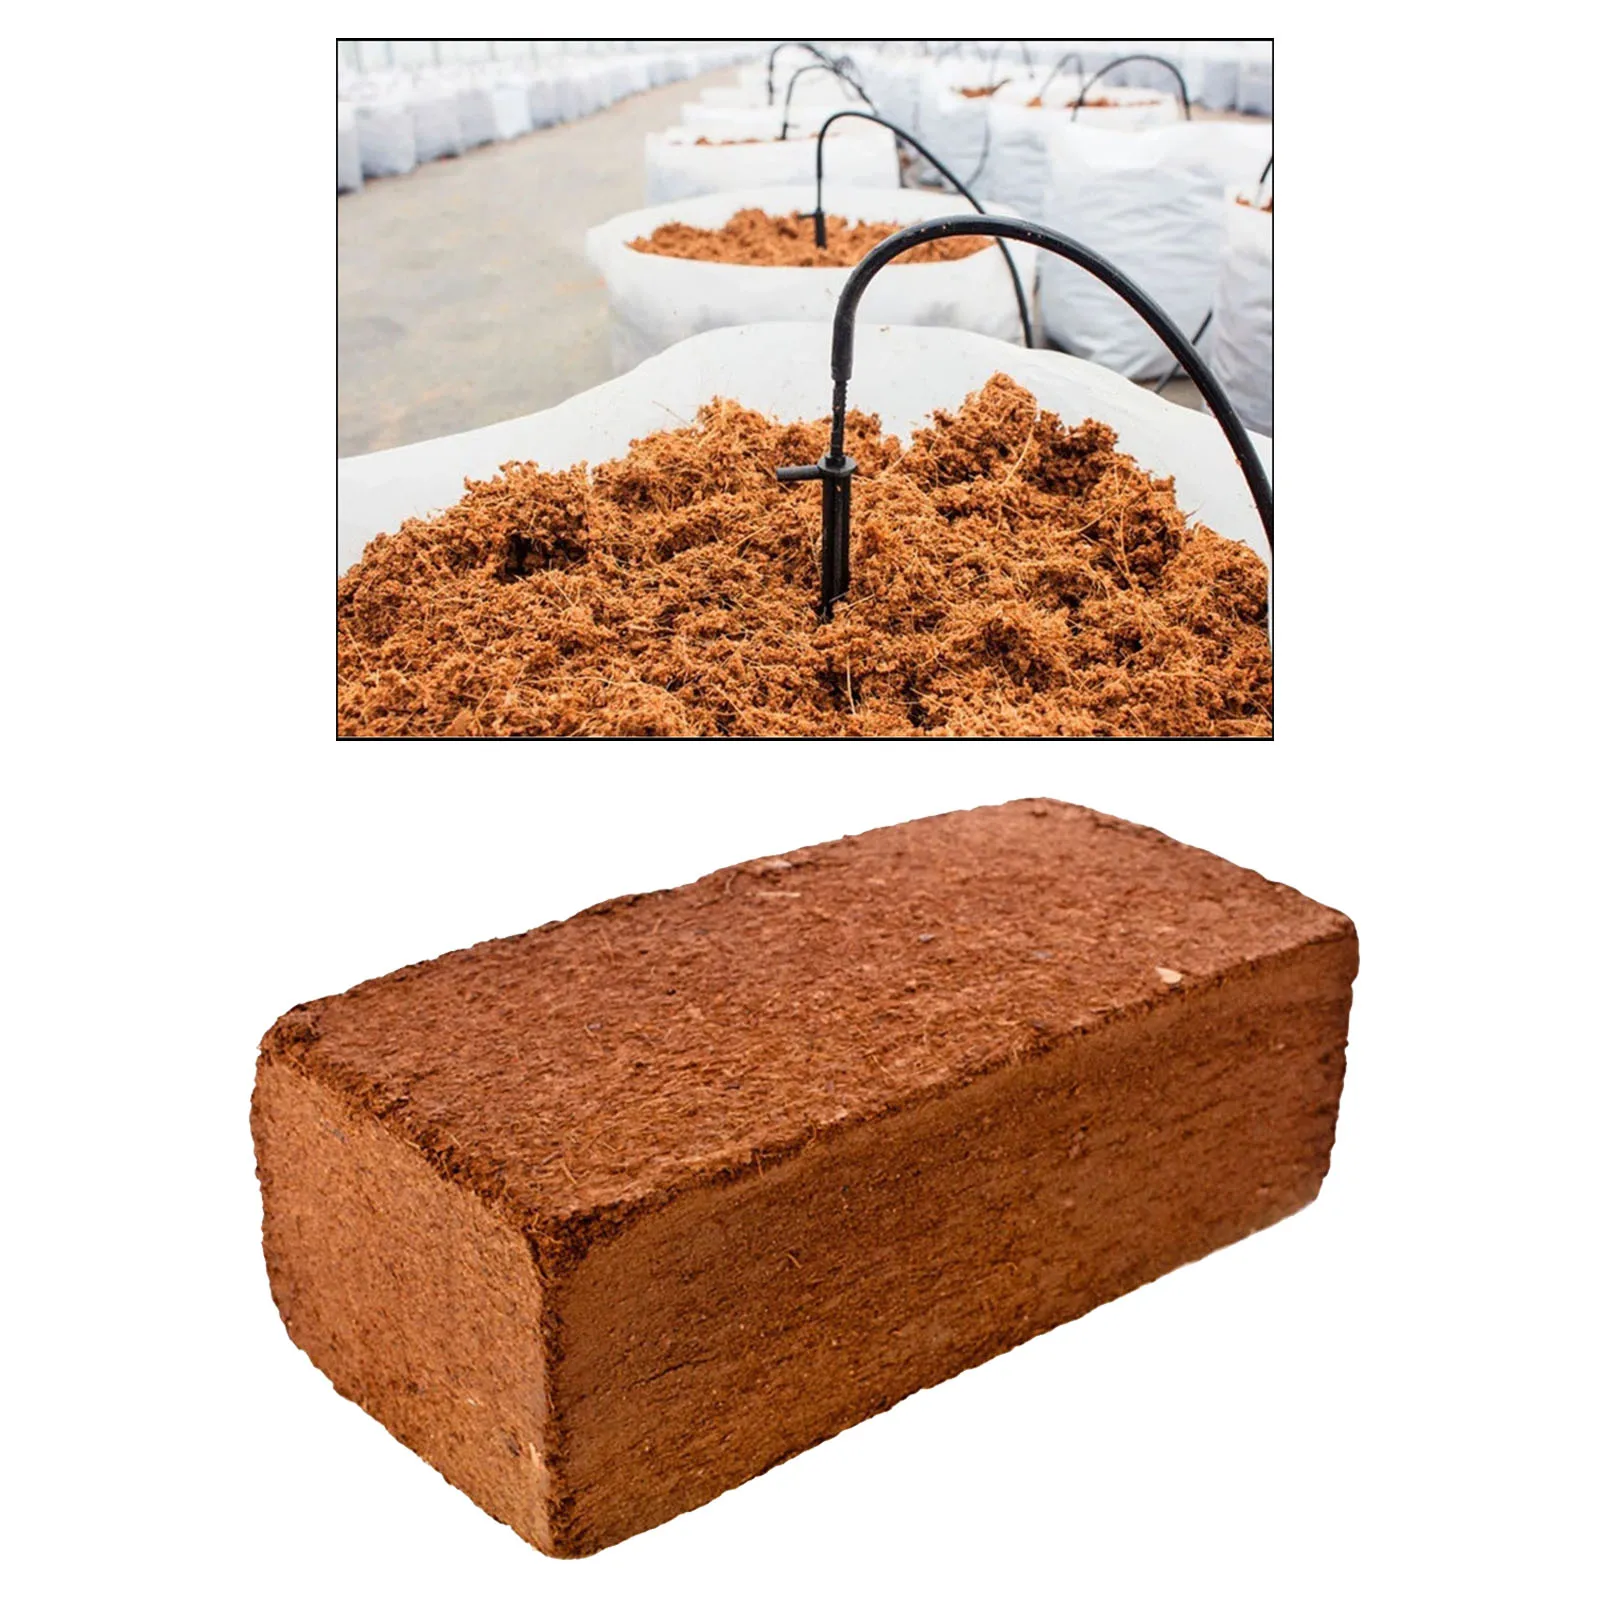 Organic 650g Planting Coco Nutrient Soil Coconut Coir Bricks Growing Media 